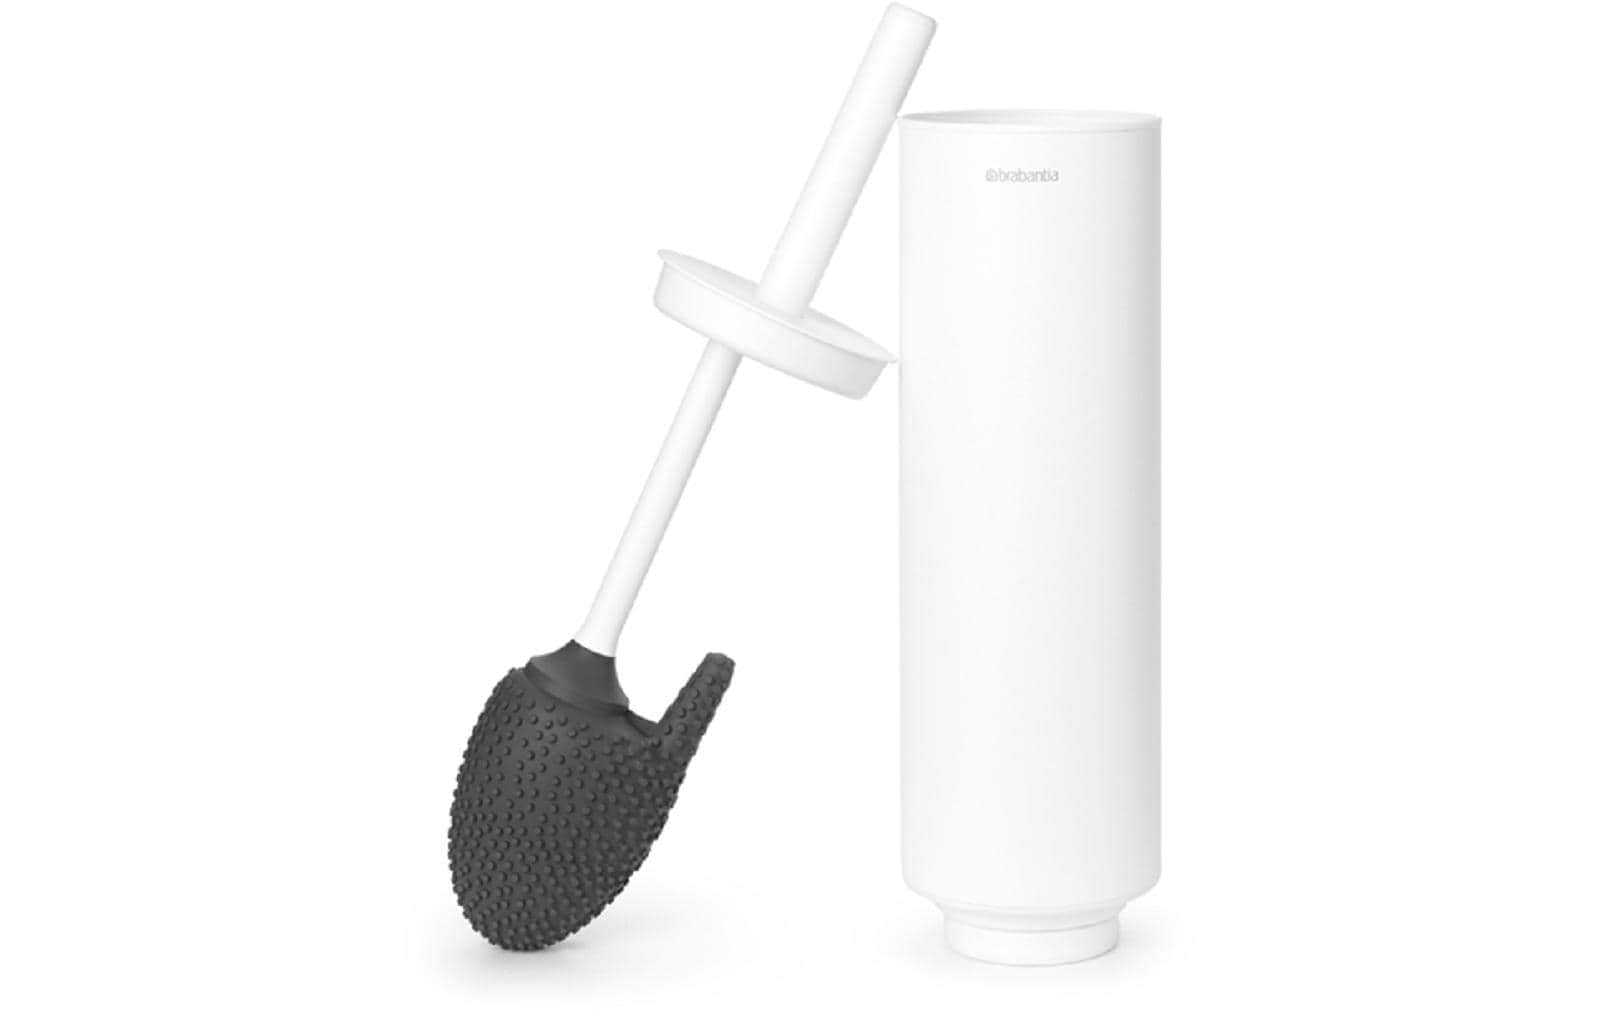 Brabantia WC-Garnitur »Mindset Weiss«, aus Kunststoff-Silikon